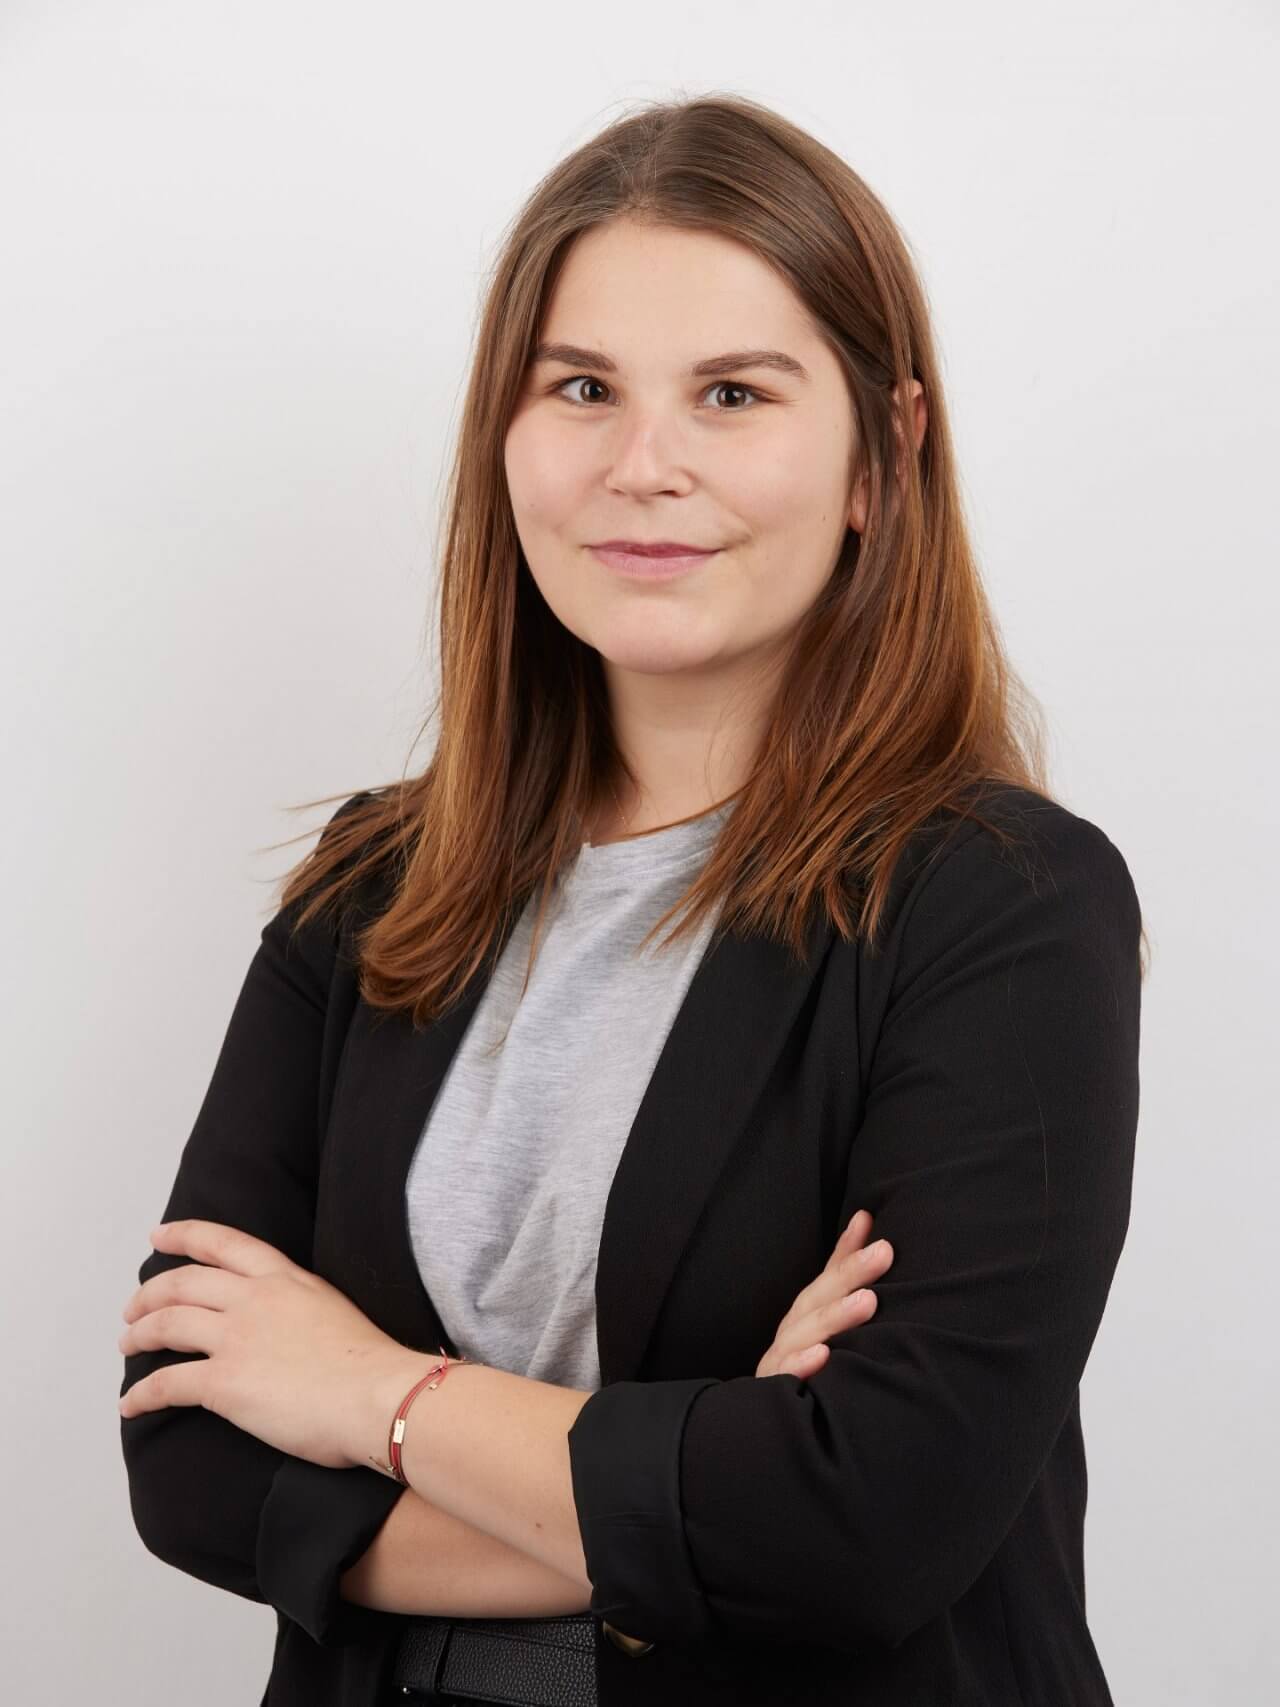 Laura Pöltl, Social Media & Search Strategy Managerin bei adverserve